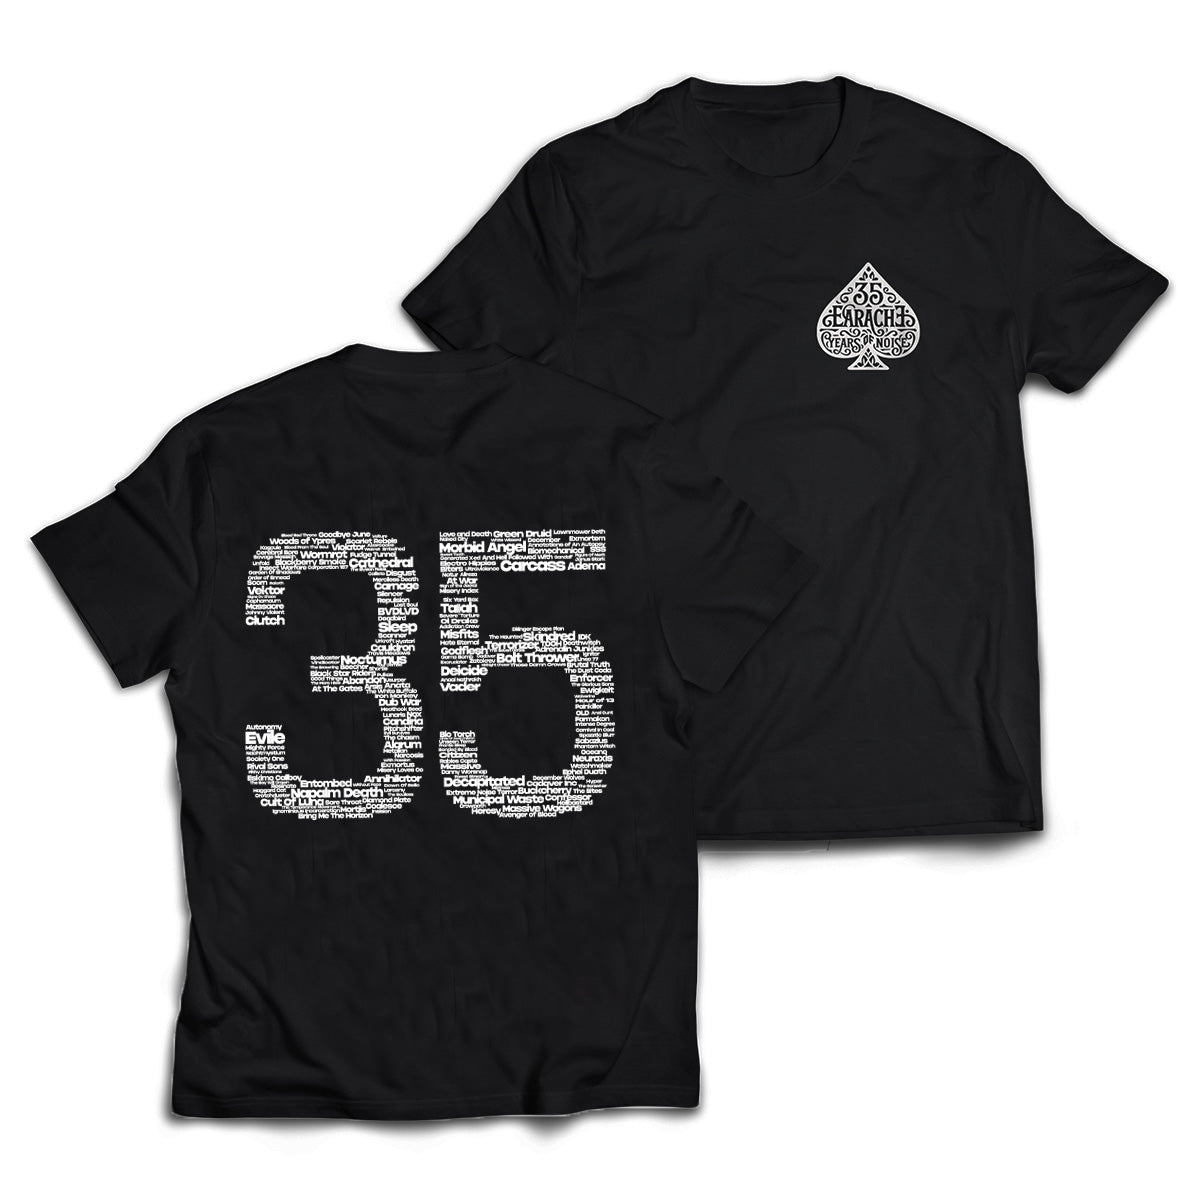 Earache "35 Years Of Noise - Ace" T shirt